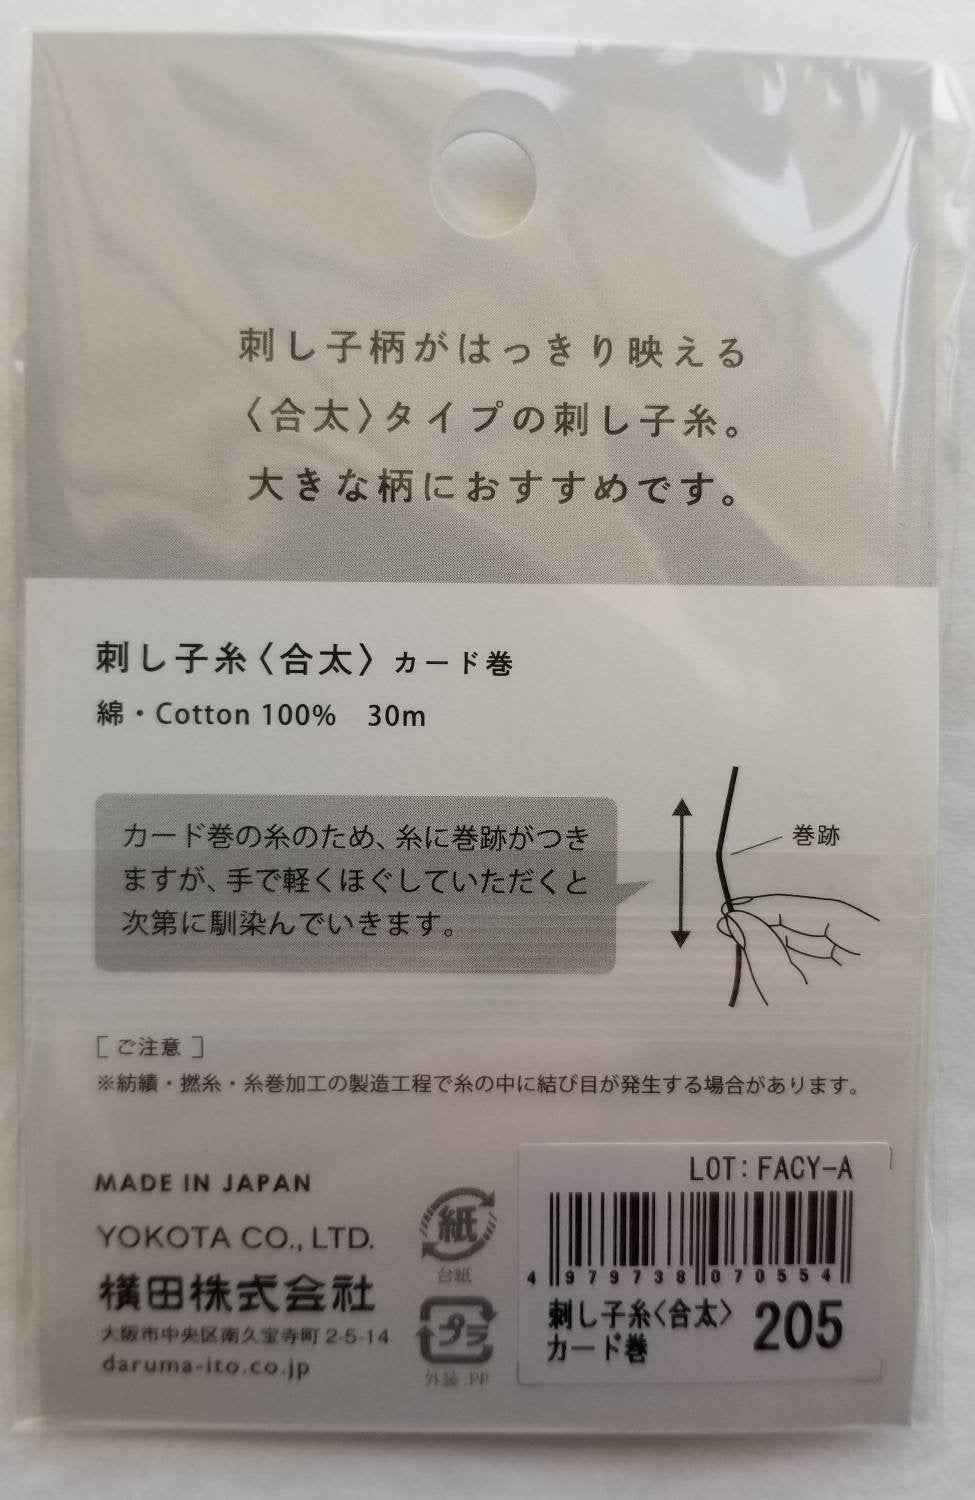 Daruma #205 PEACOCK Japanese Cotton SASHIKO thread 30 meter skein 20/6